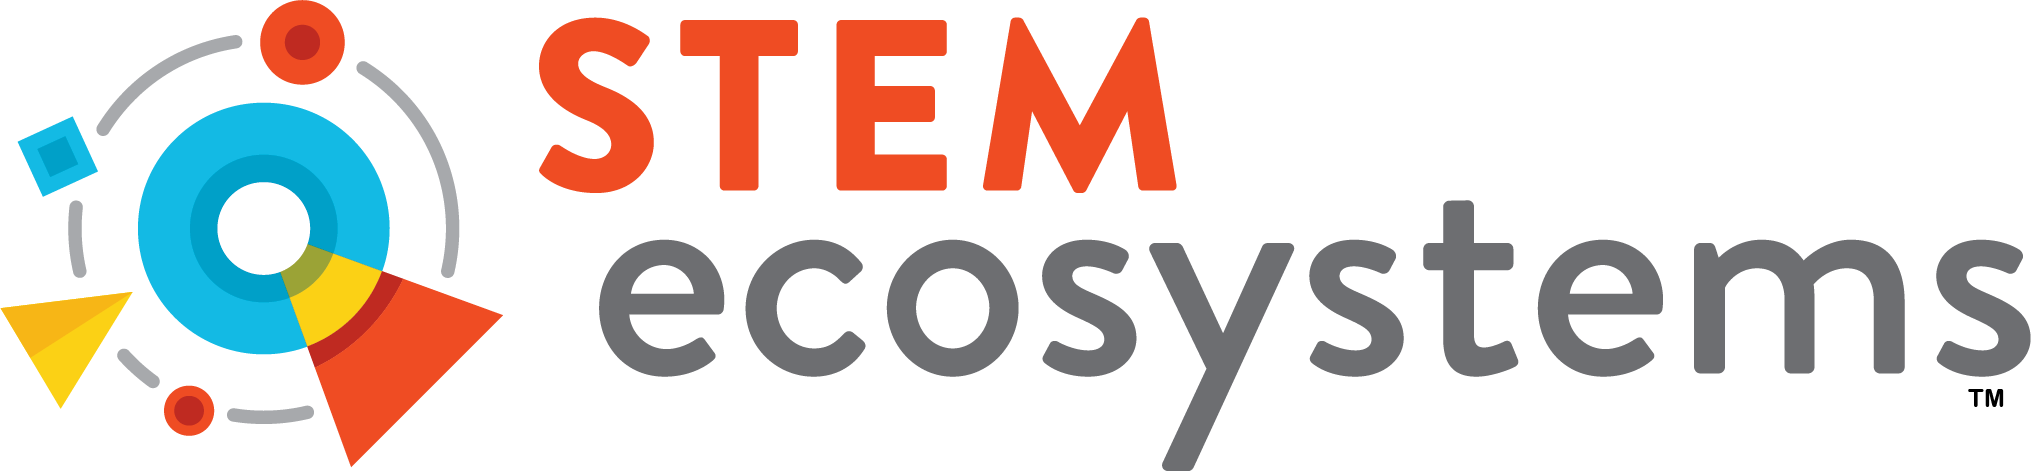 Capital Area STEM Network Center logo